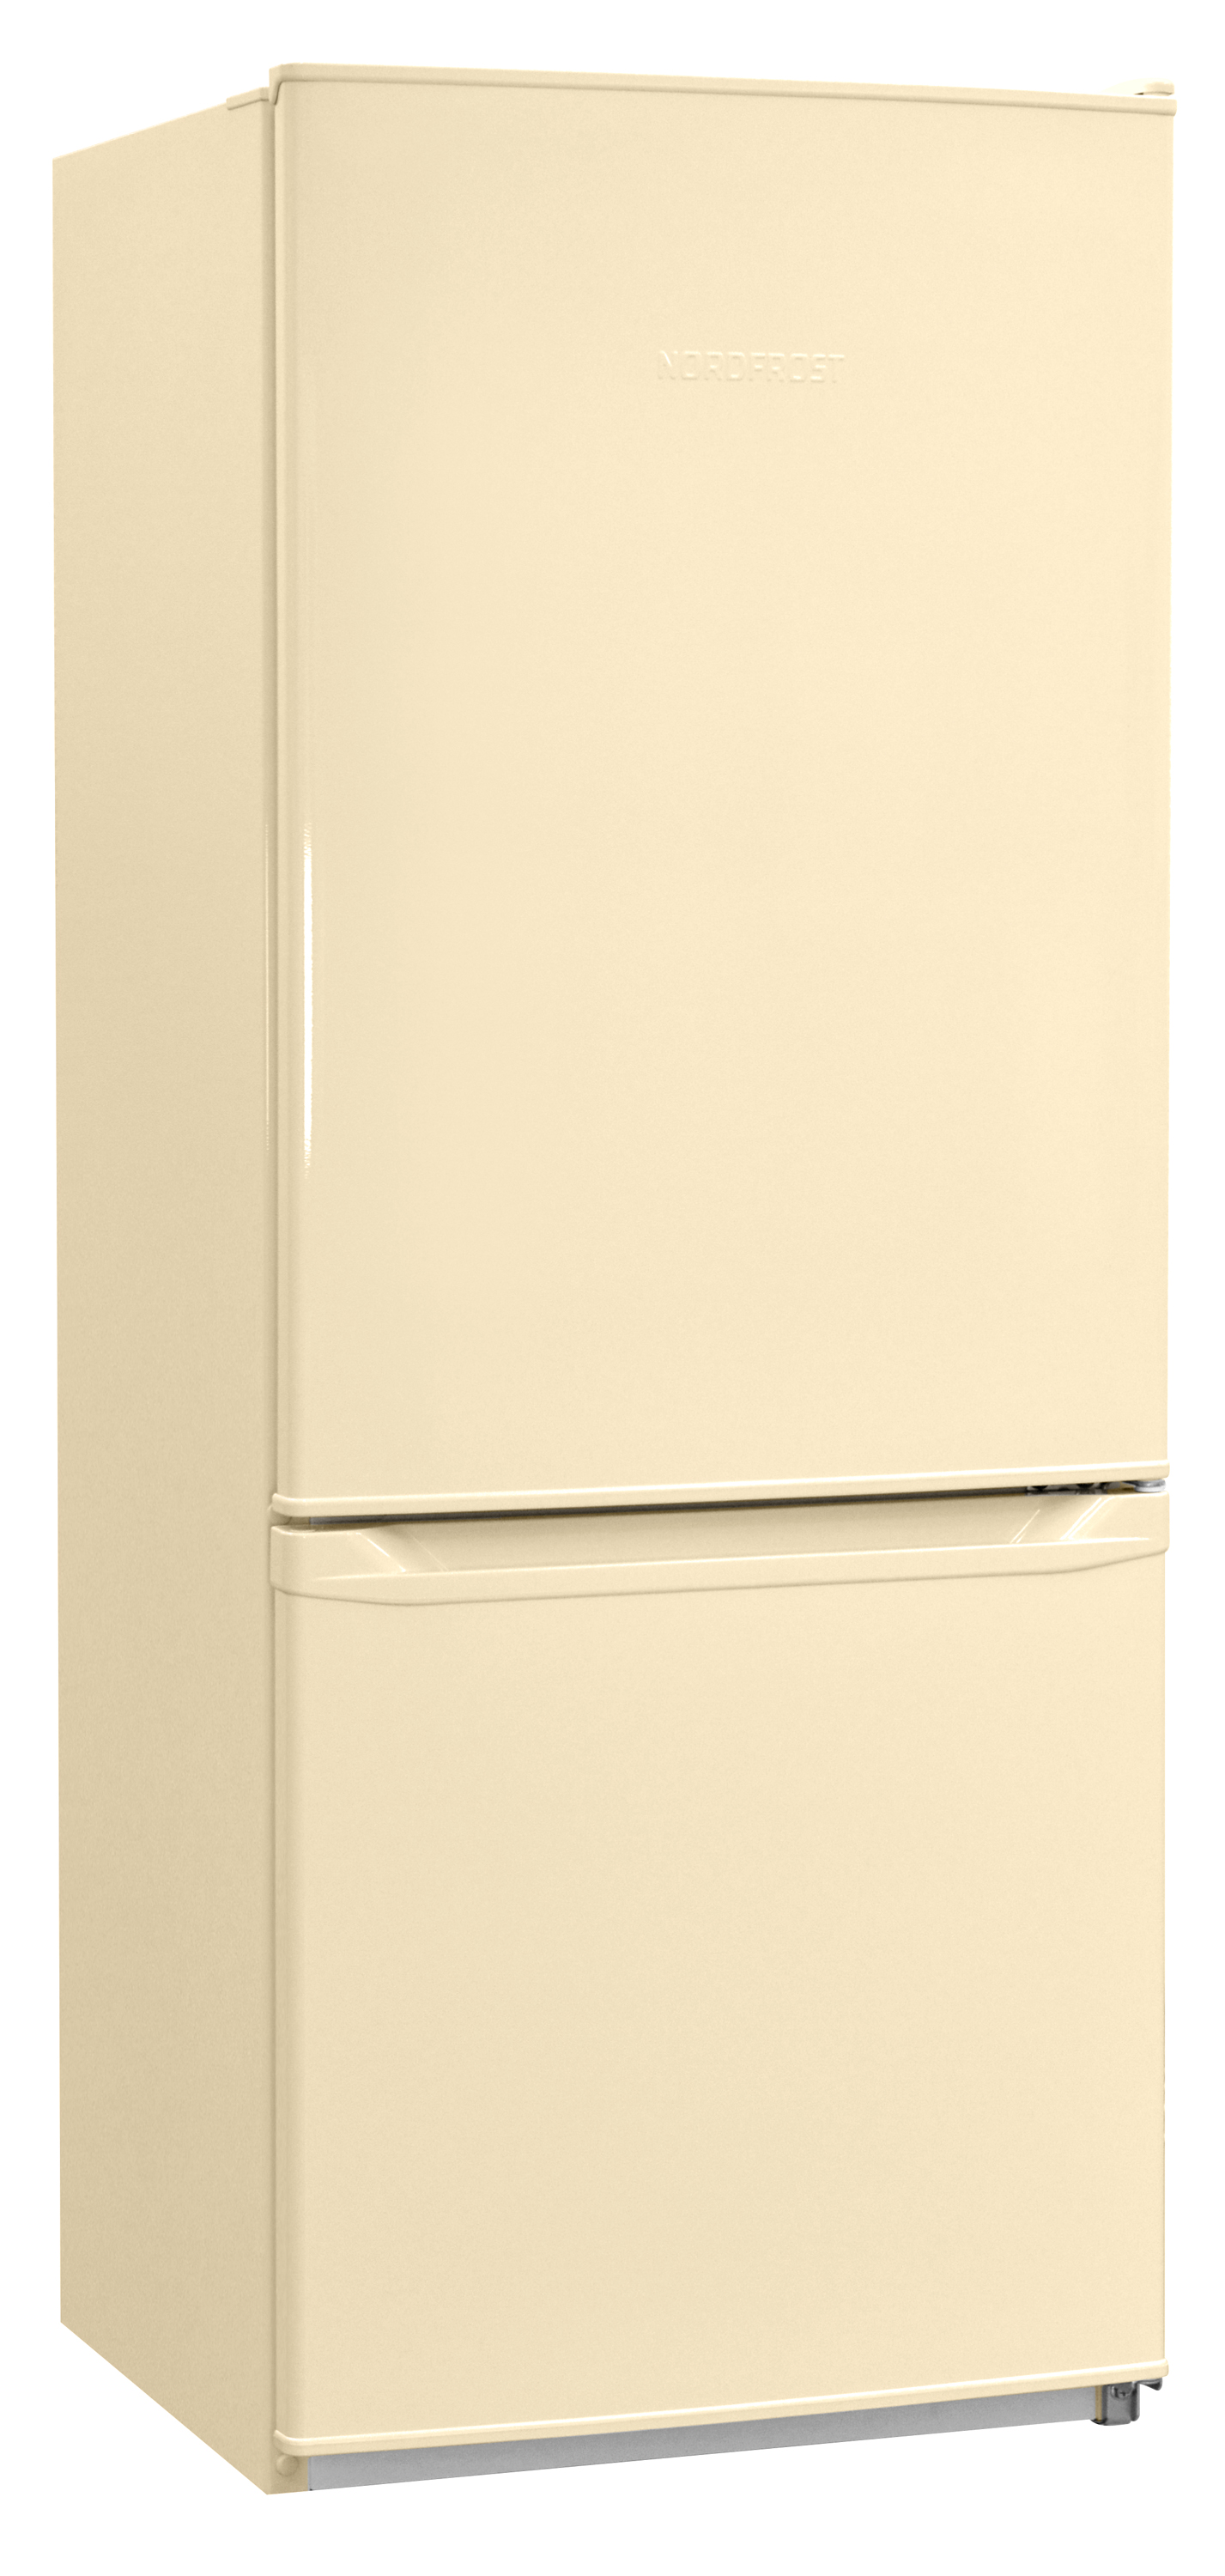 Холодильник NordFrost NRB 121 732 бежевый многокамерный холодильник nordfrost rfq 510 nfgw inverter